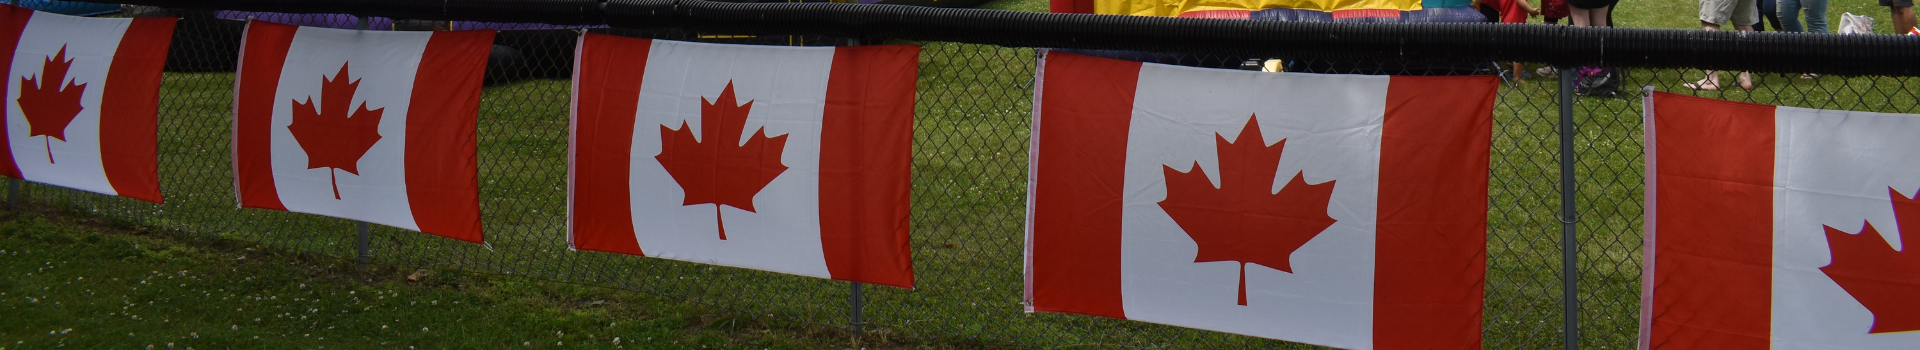 canada flags